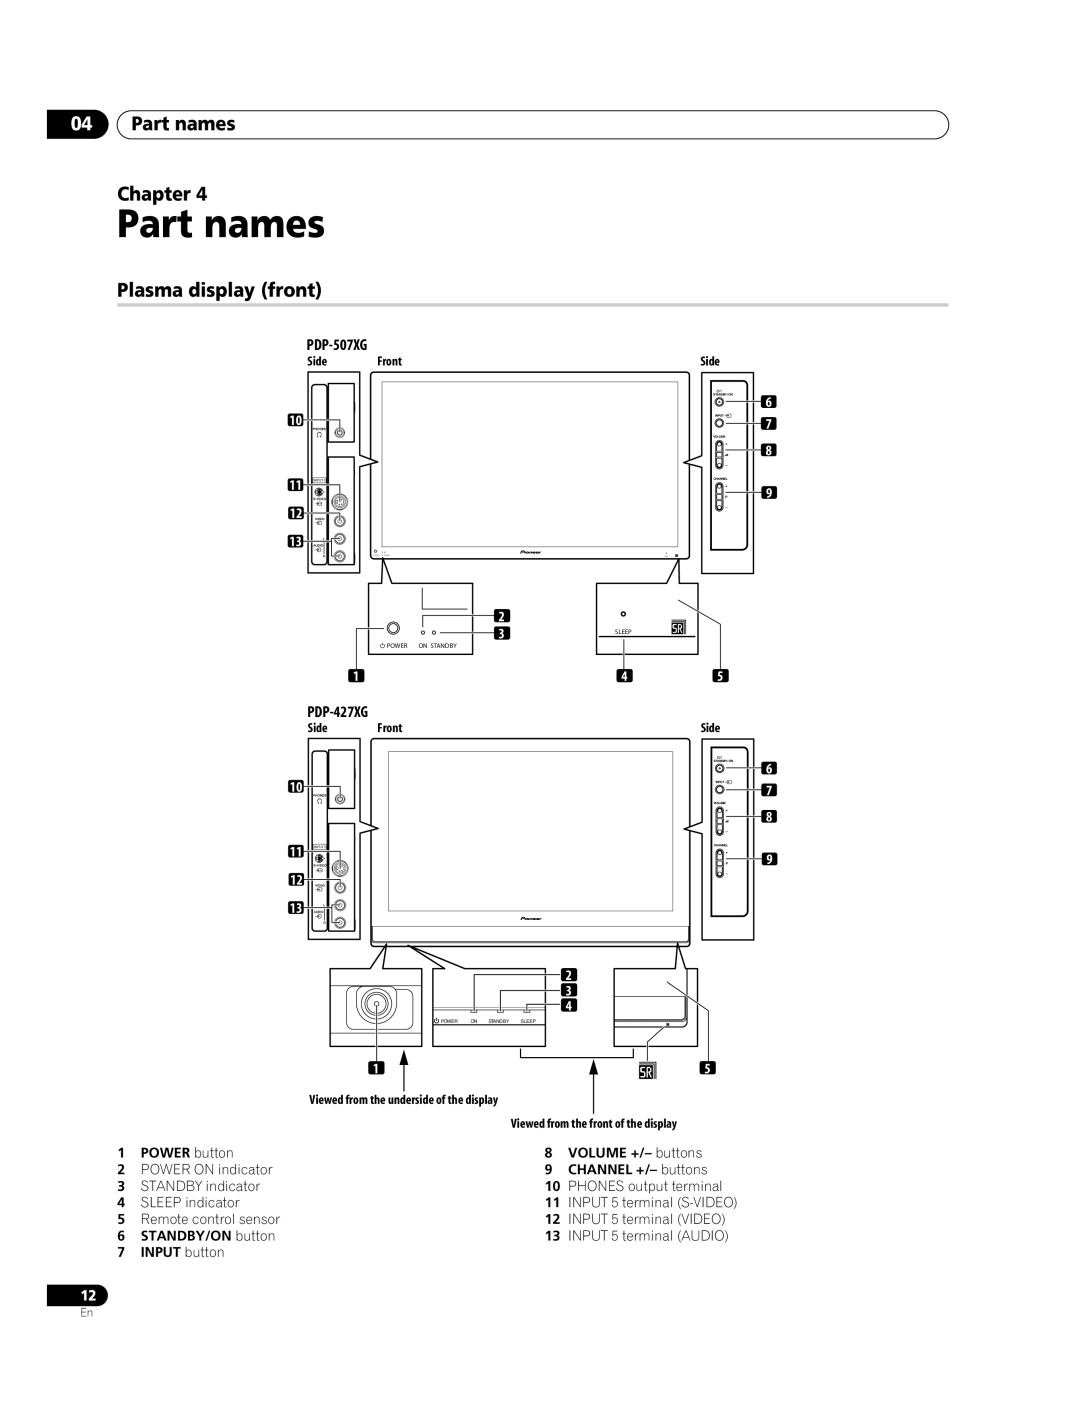 Pioneer PDP-427XG manual Part names Chapter, Plasma display front, PDP-507XG 